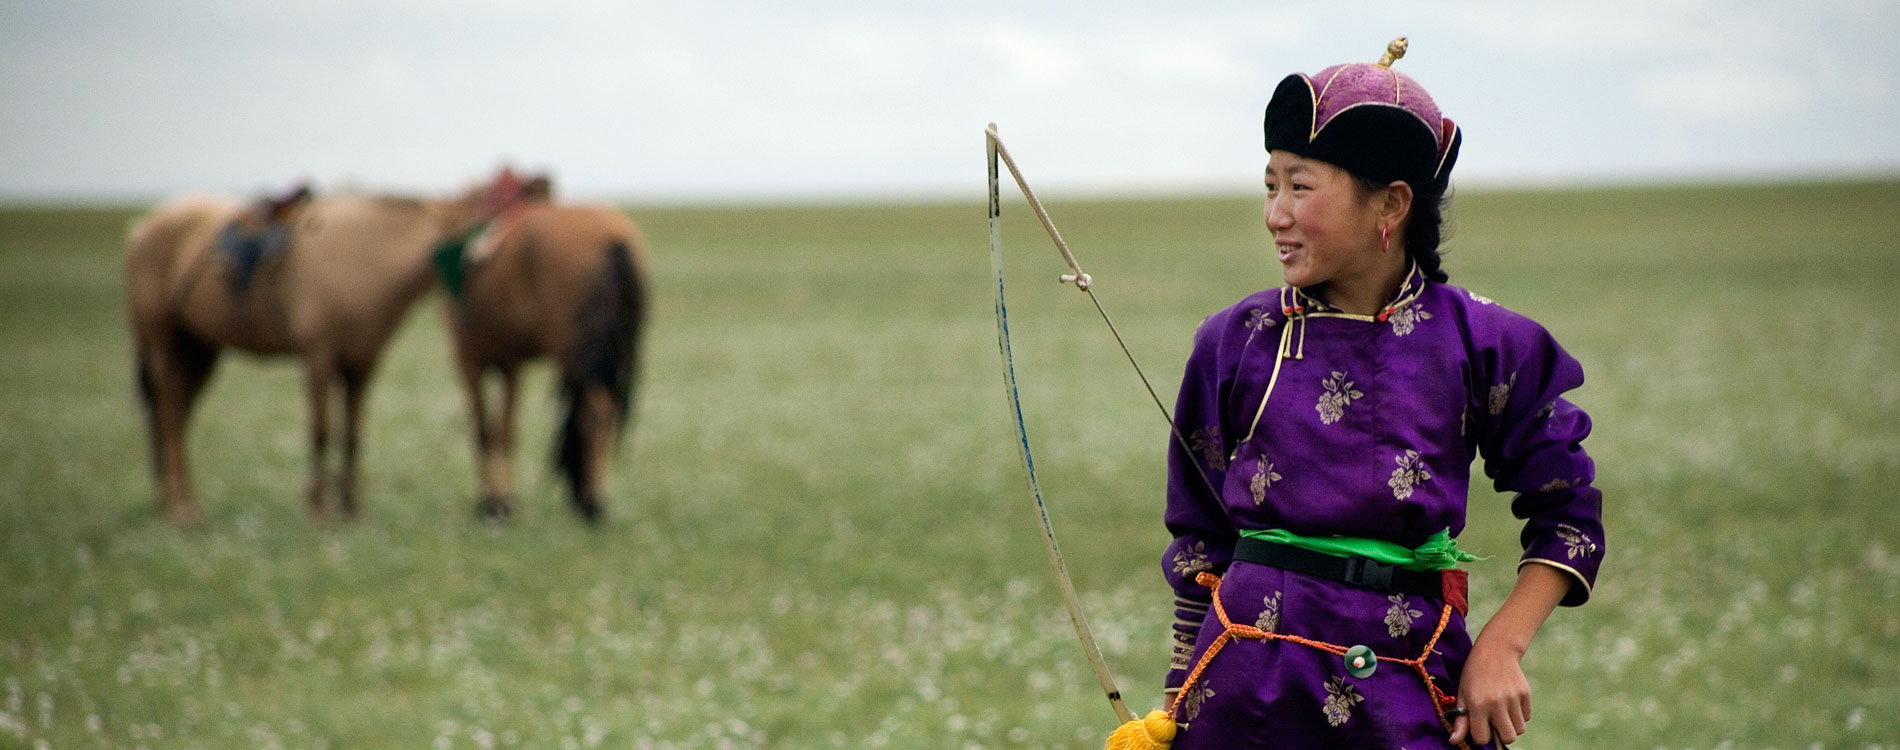 Монголиан 18 Лет Эротика